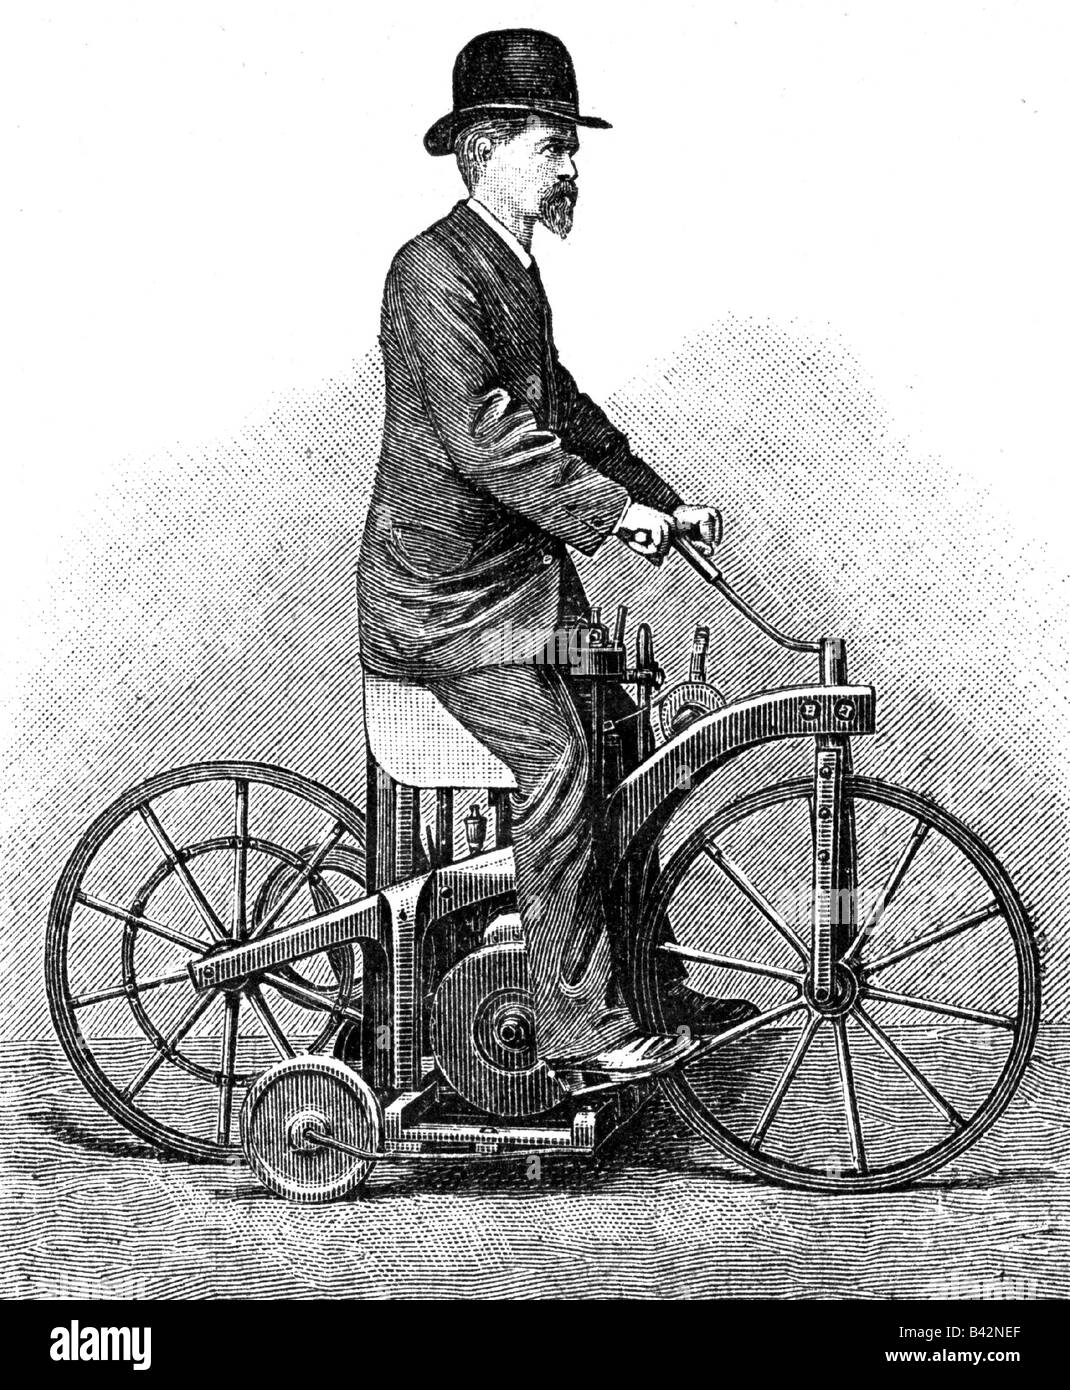 Daimler, Gottlieb Wilhelm, 17.3.1834 - 6.3.1900, German engineer, inventor, full length, on his petrol-driven bike, anonymous woodcut, from the journal 'Gartenlaube', 19th century, Stock Photo